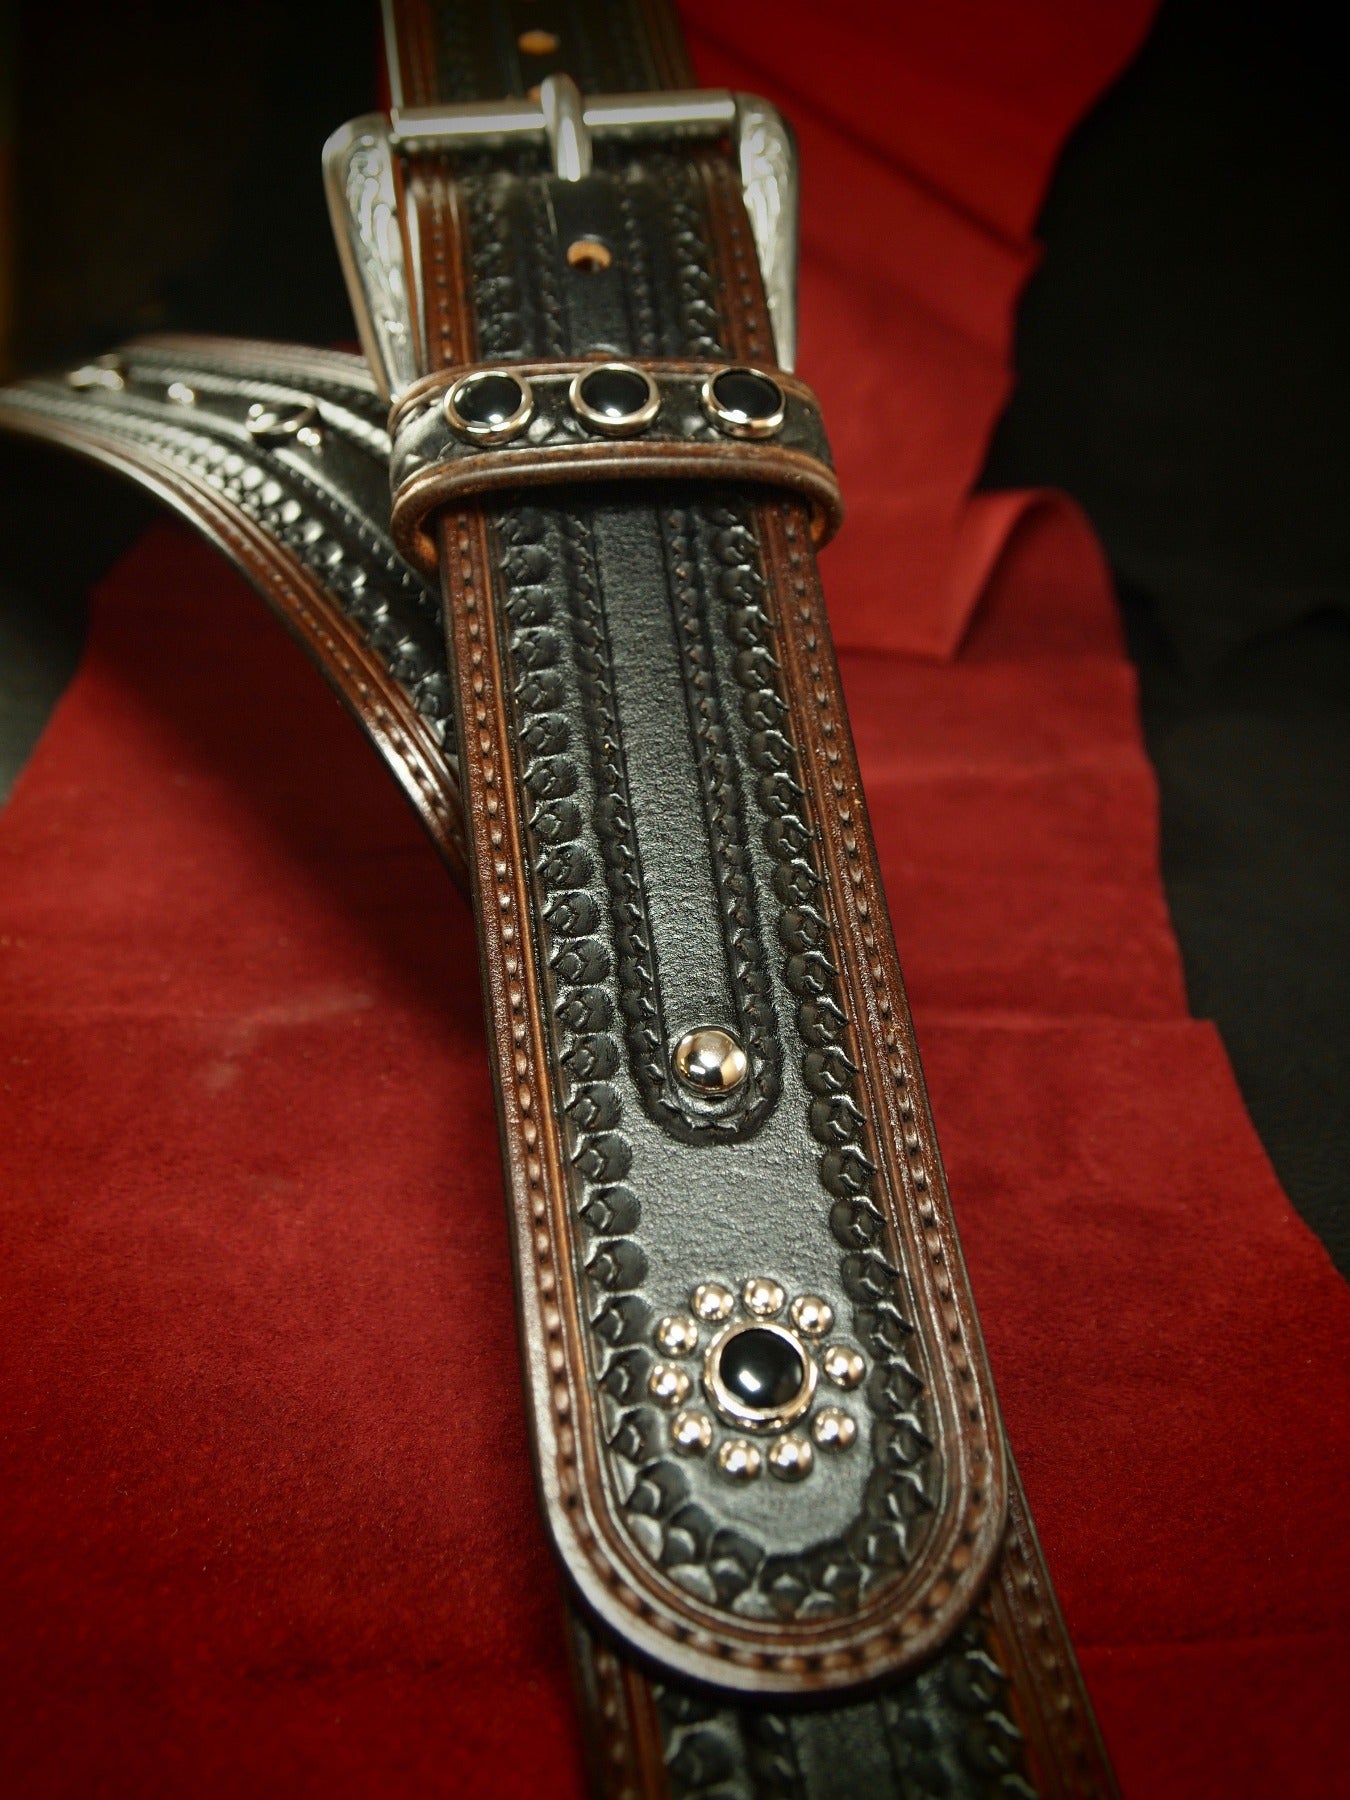 Black bridle leather Vintage style guitar strap!